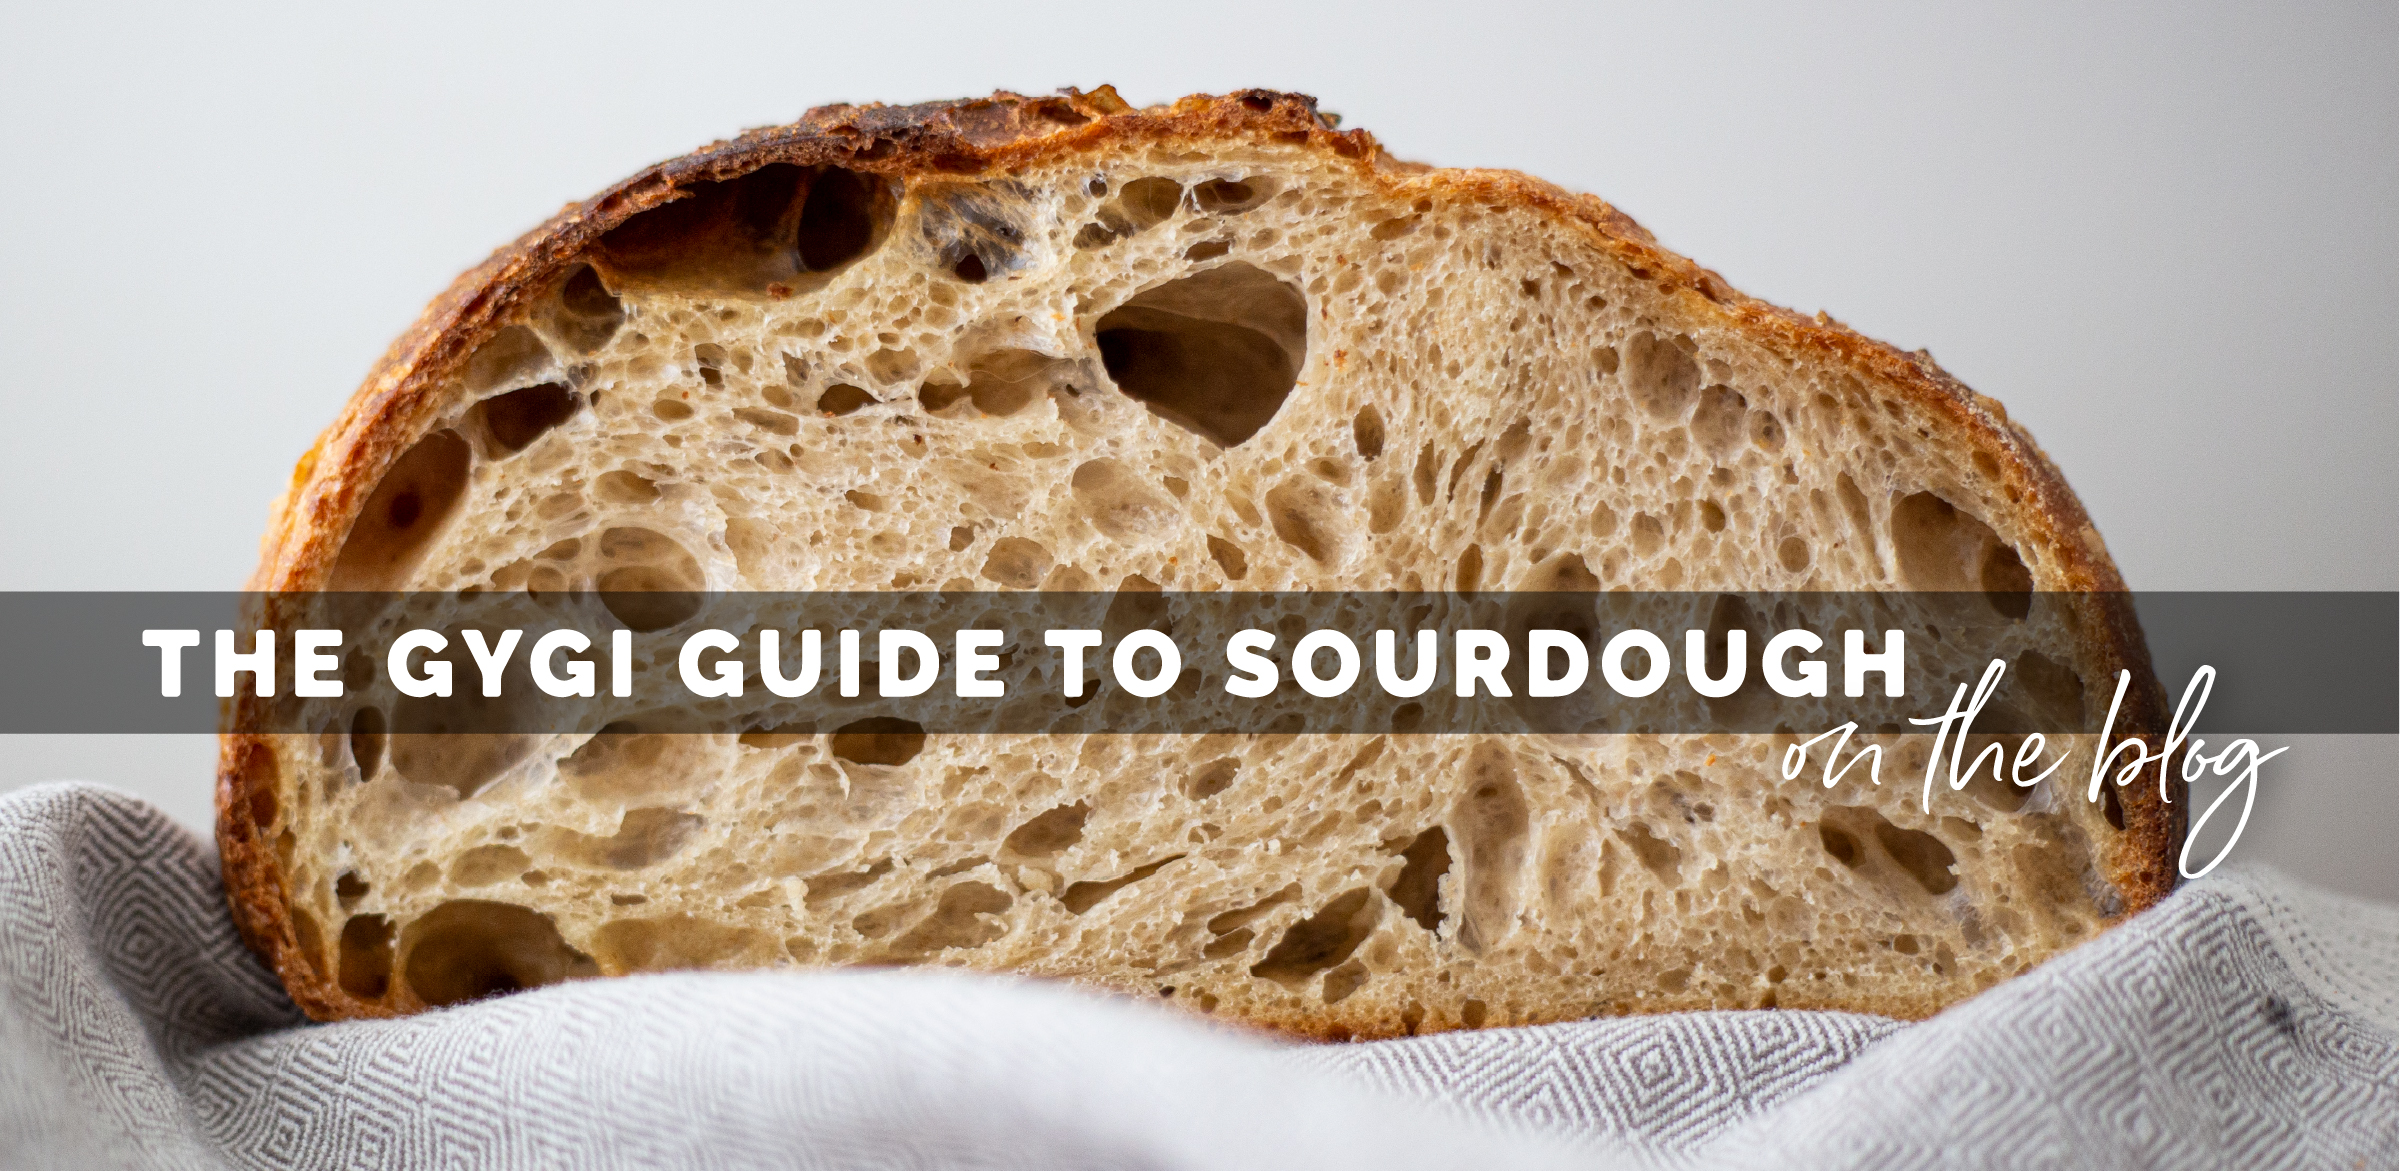 The Gygi Guide to Sourdough